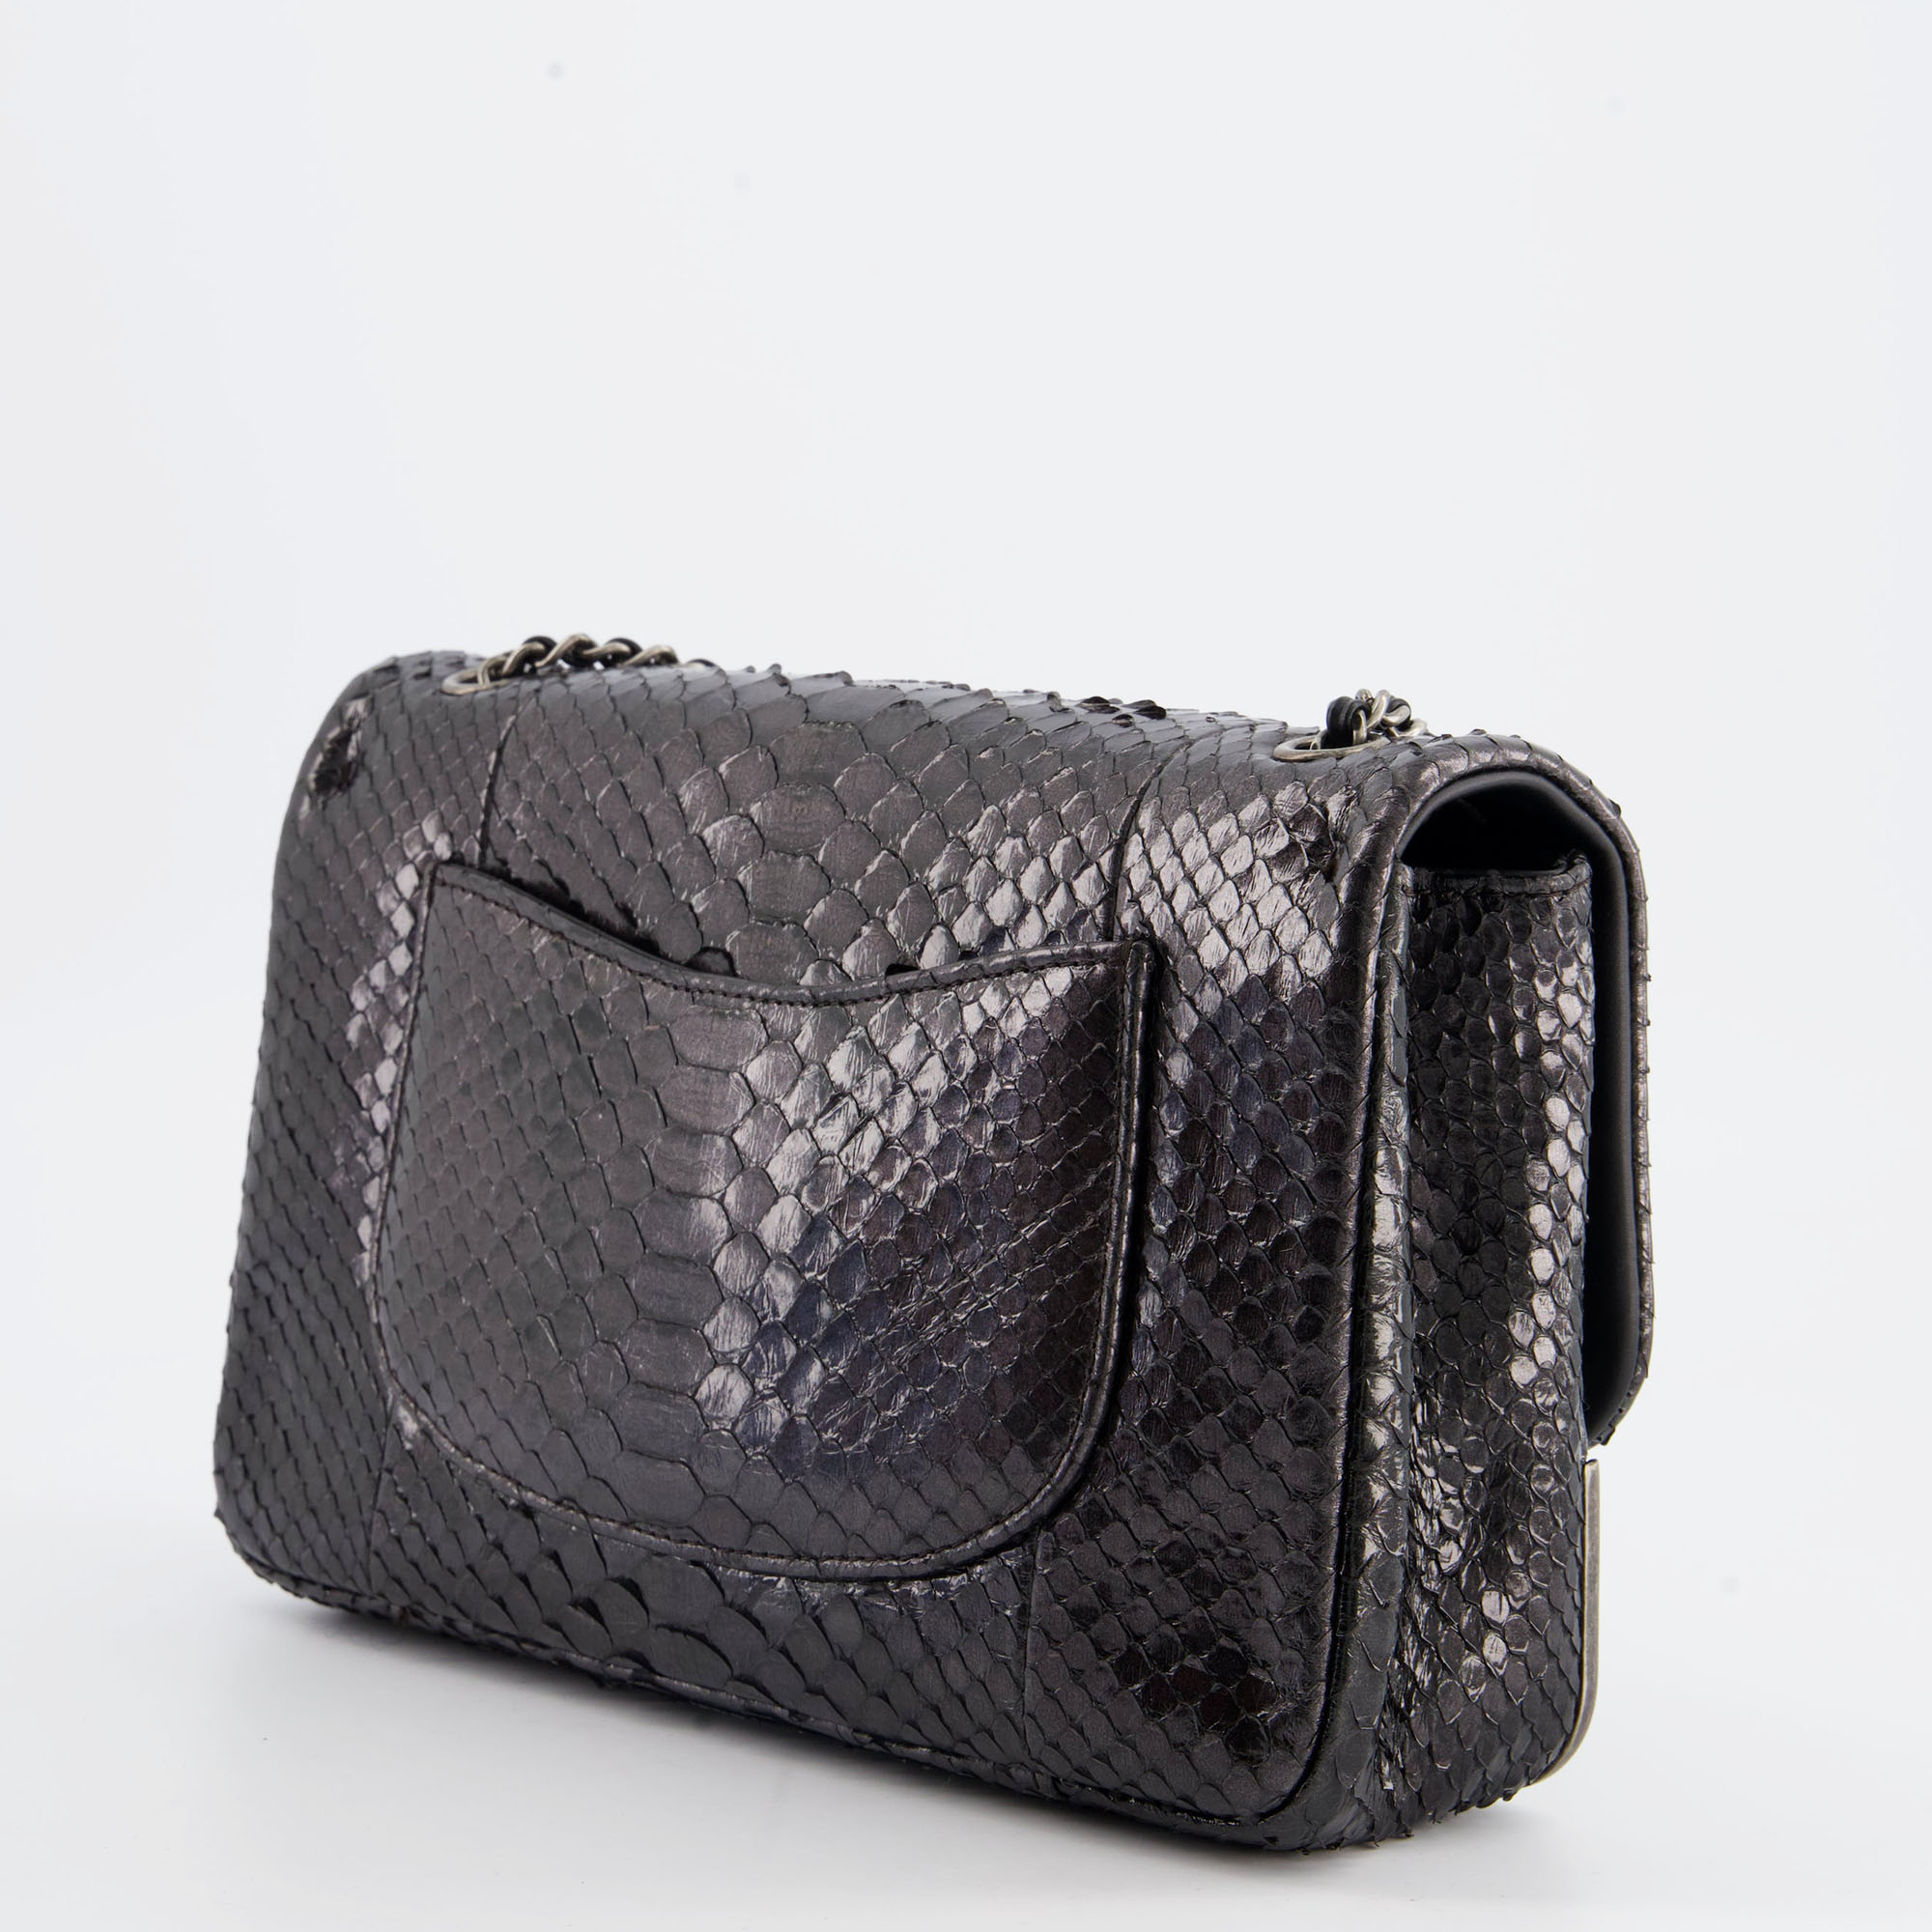 Chanel Metallic Black Python Small Single Flap Bag With Ruthenium Textured Hardware